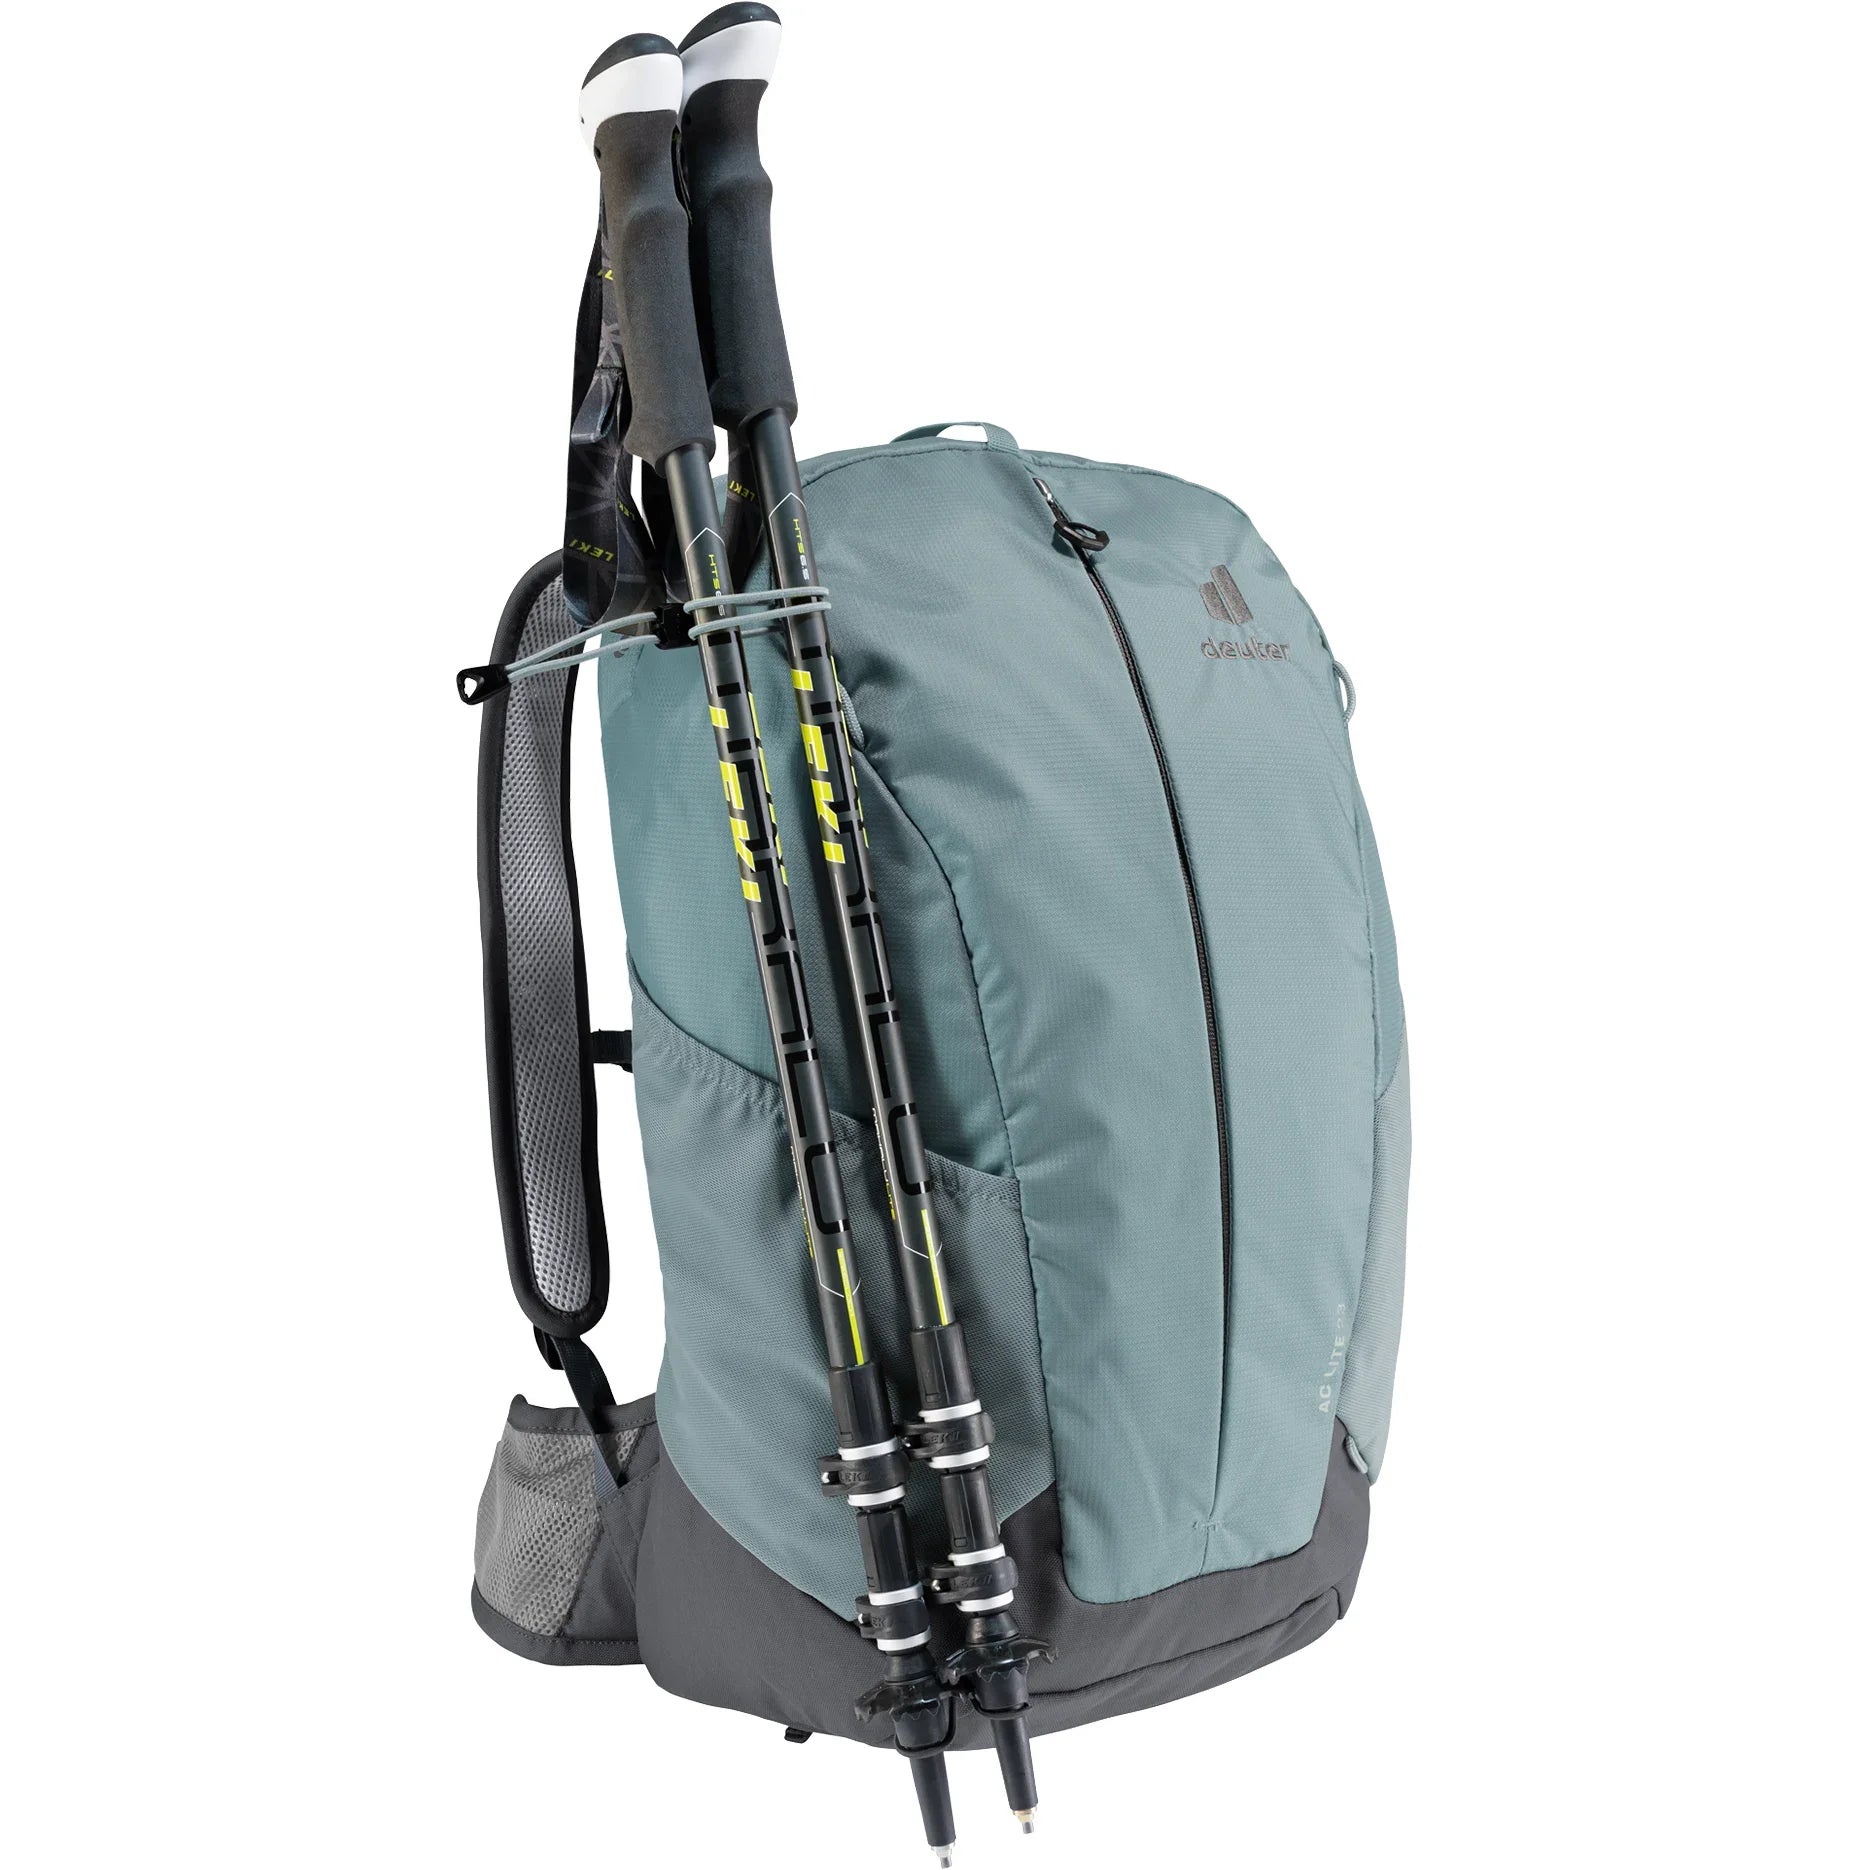 Deuter Travel AC Lite 23 hiking backpack 52 cm - clay-deepsea